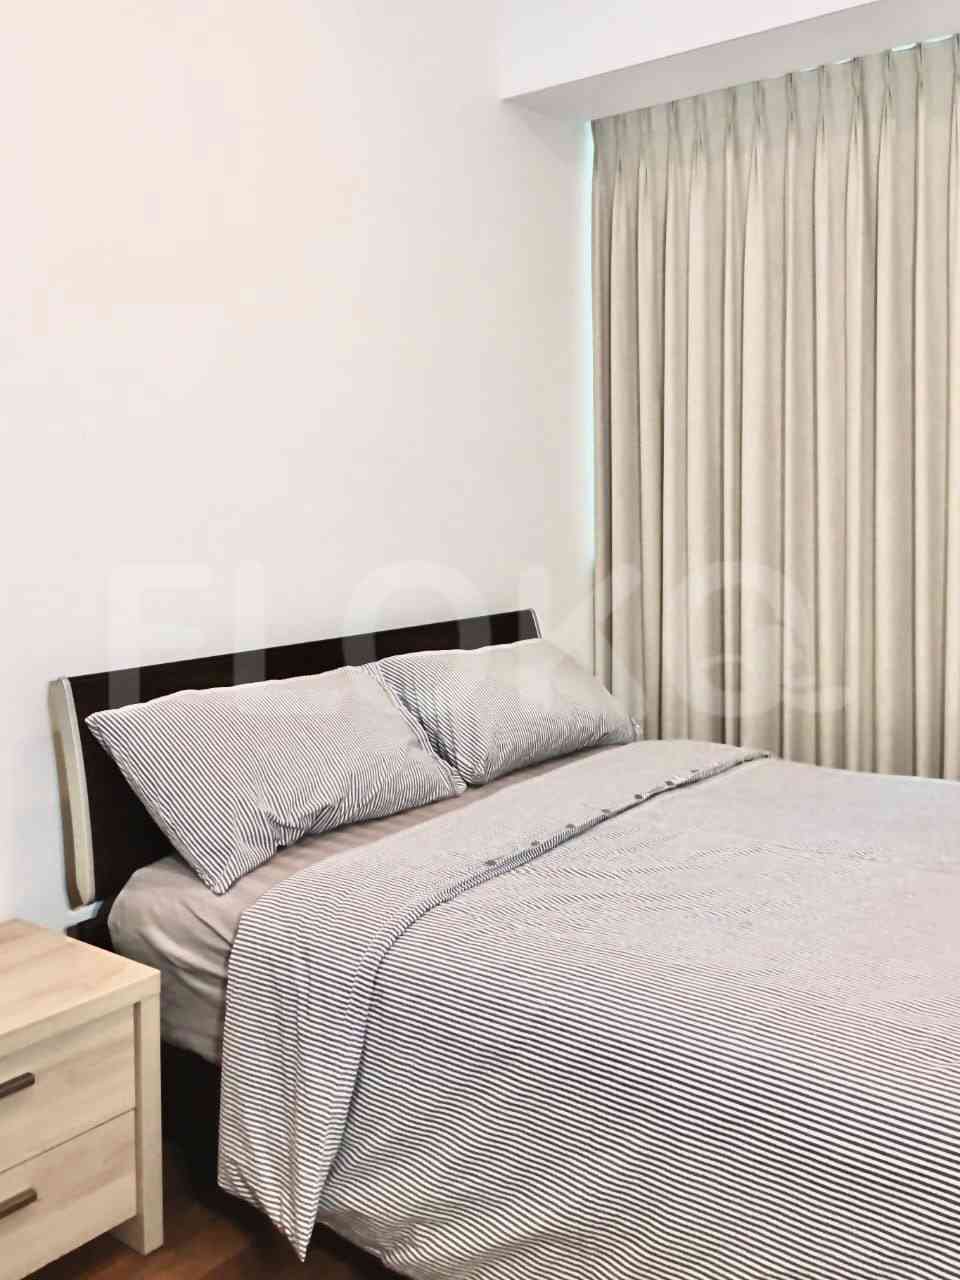 3 Bedroom on 20th Floor for Rent in Kemang Village Residence - fke21a 2